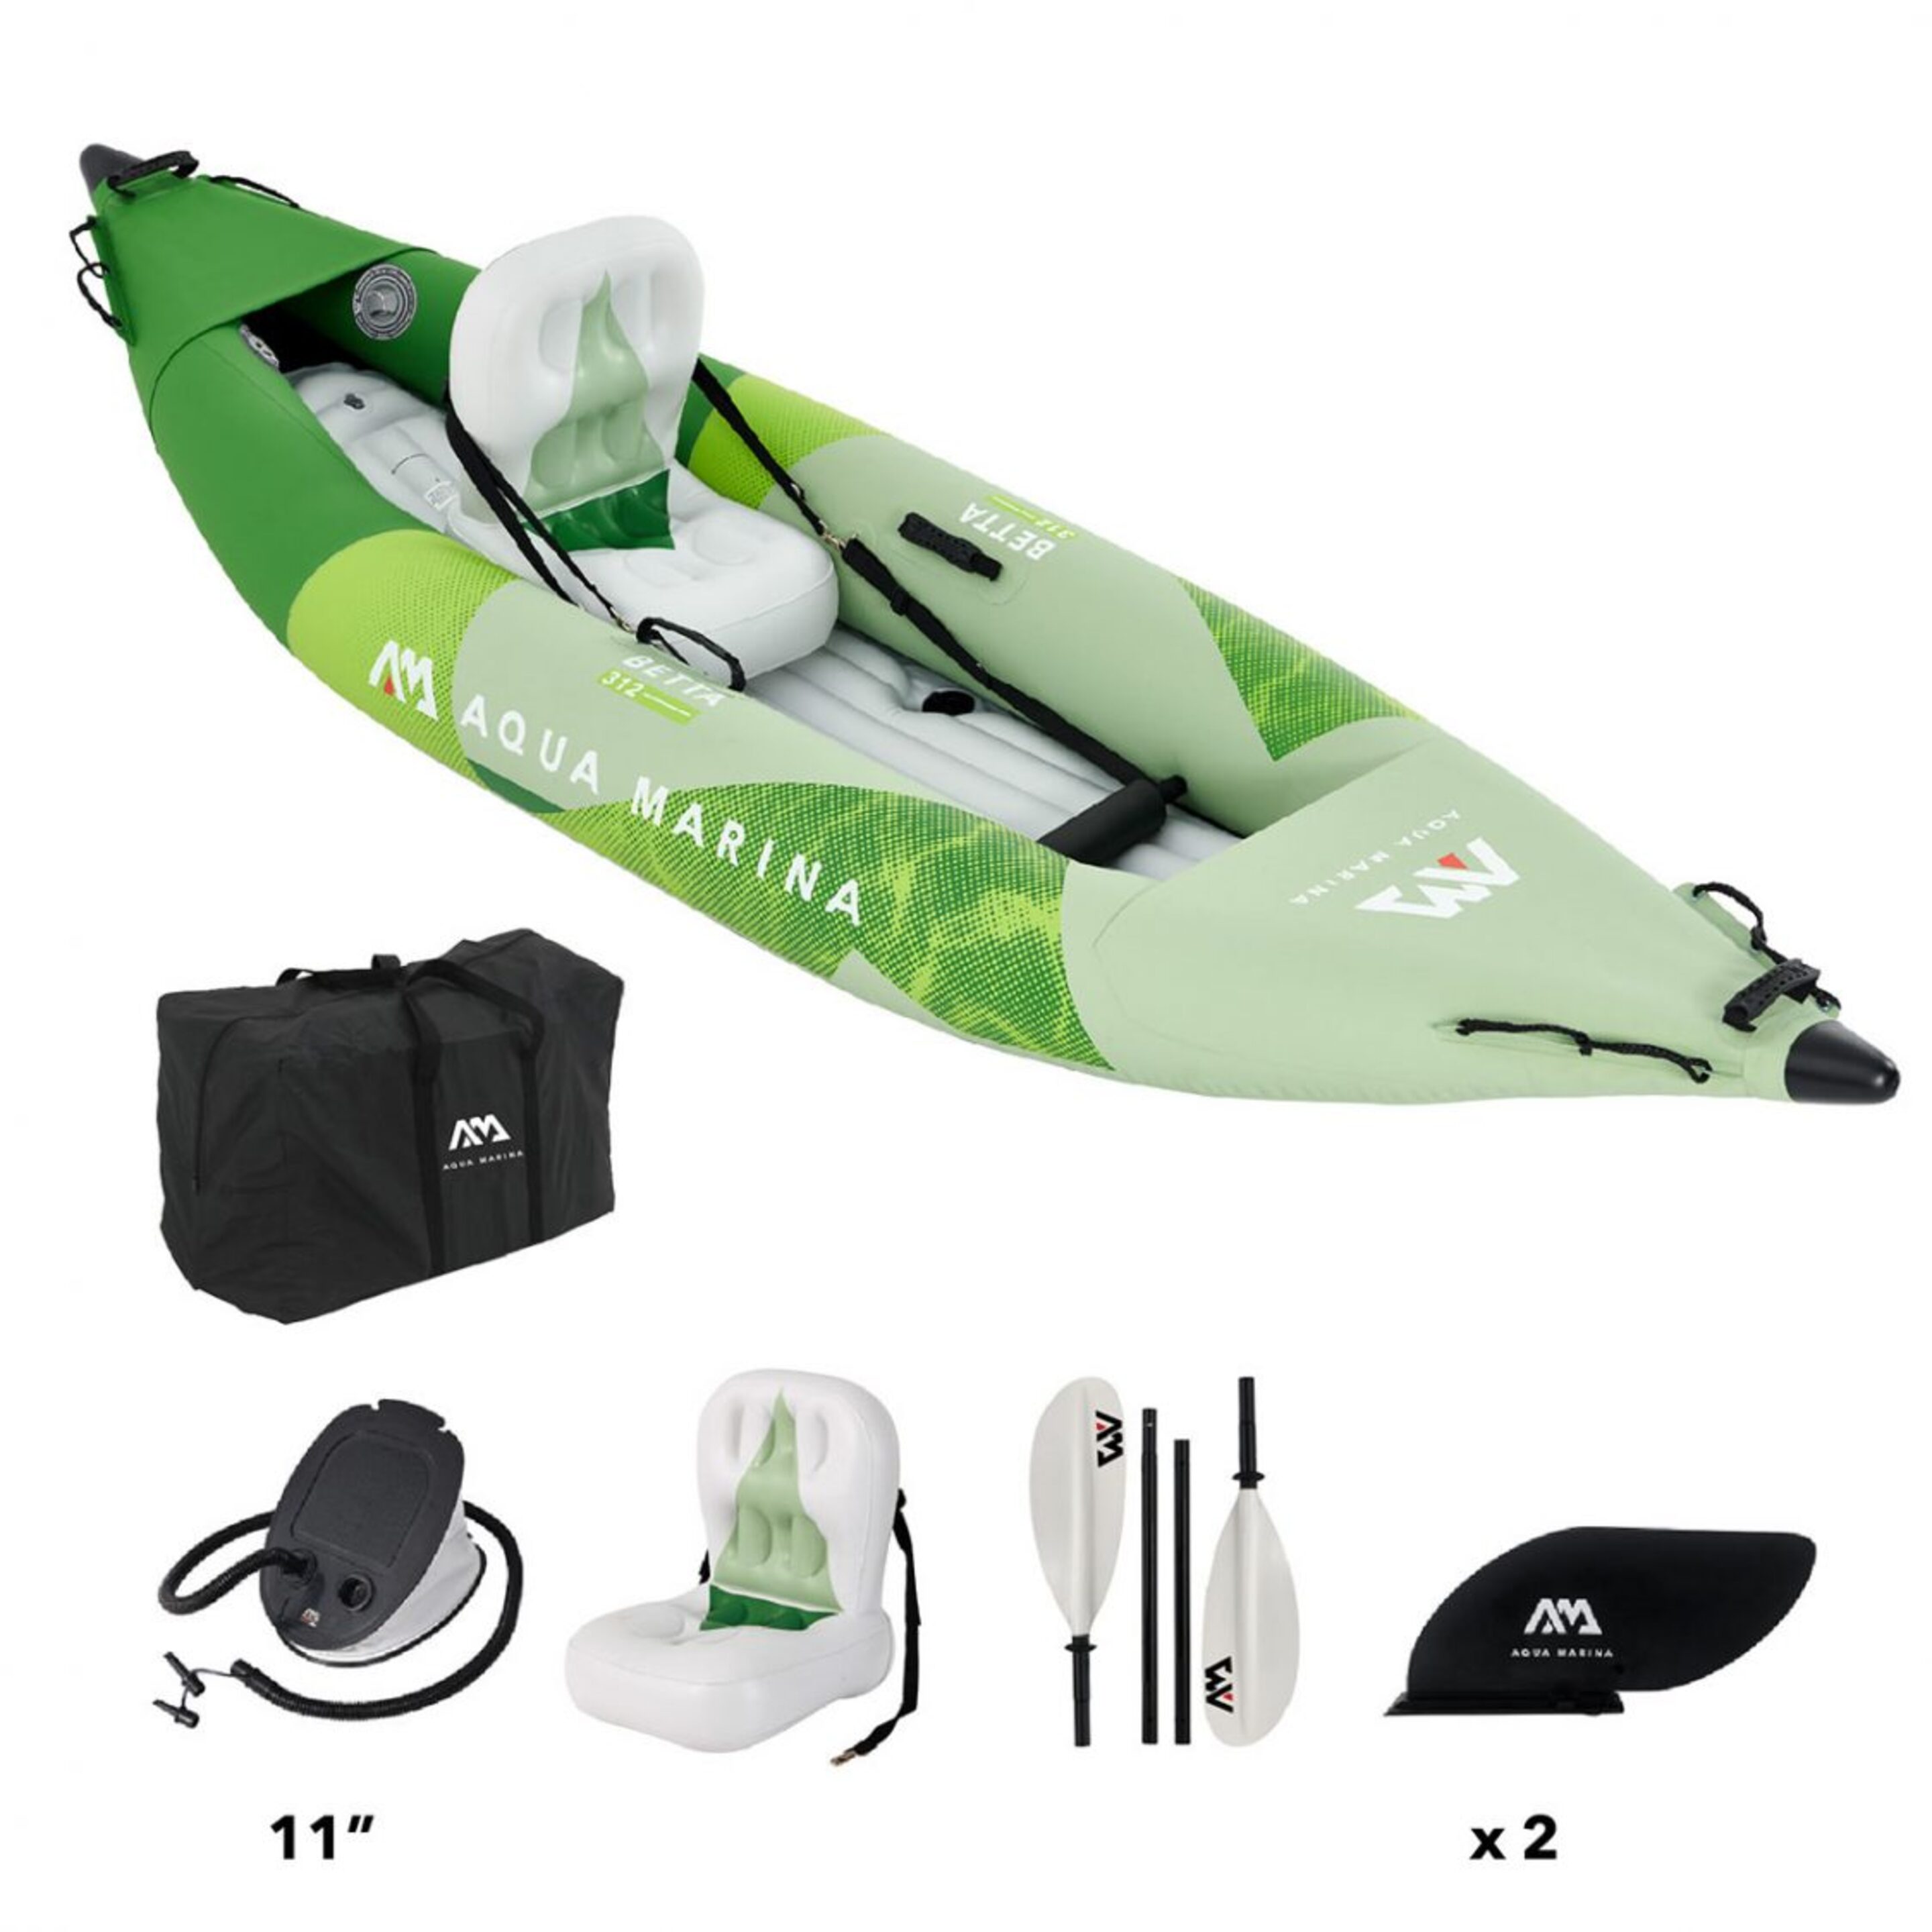 Kakay Hinchable Betta 312 - Verde/Gris - Kayak individual  MKP